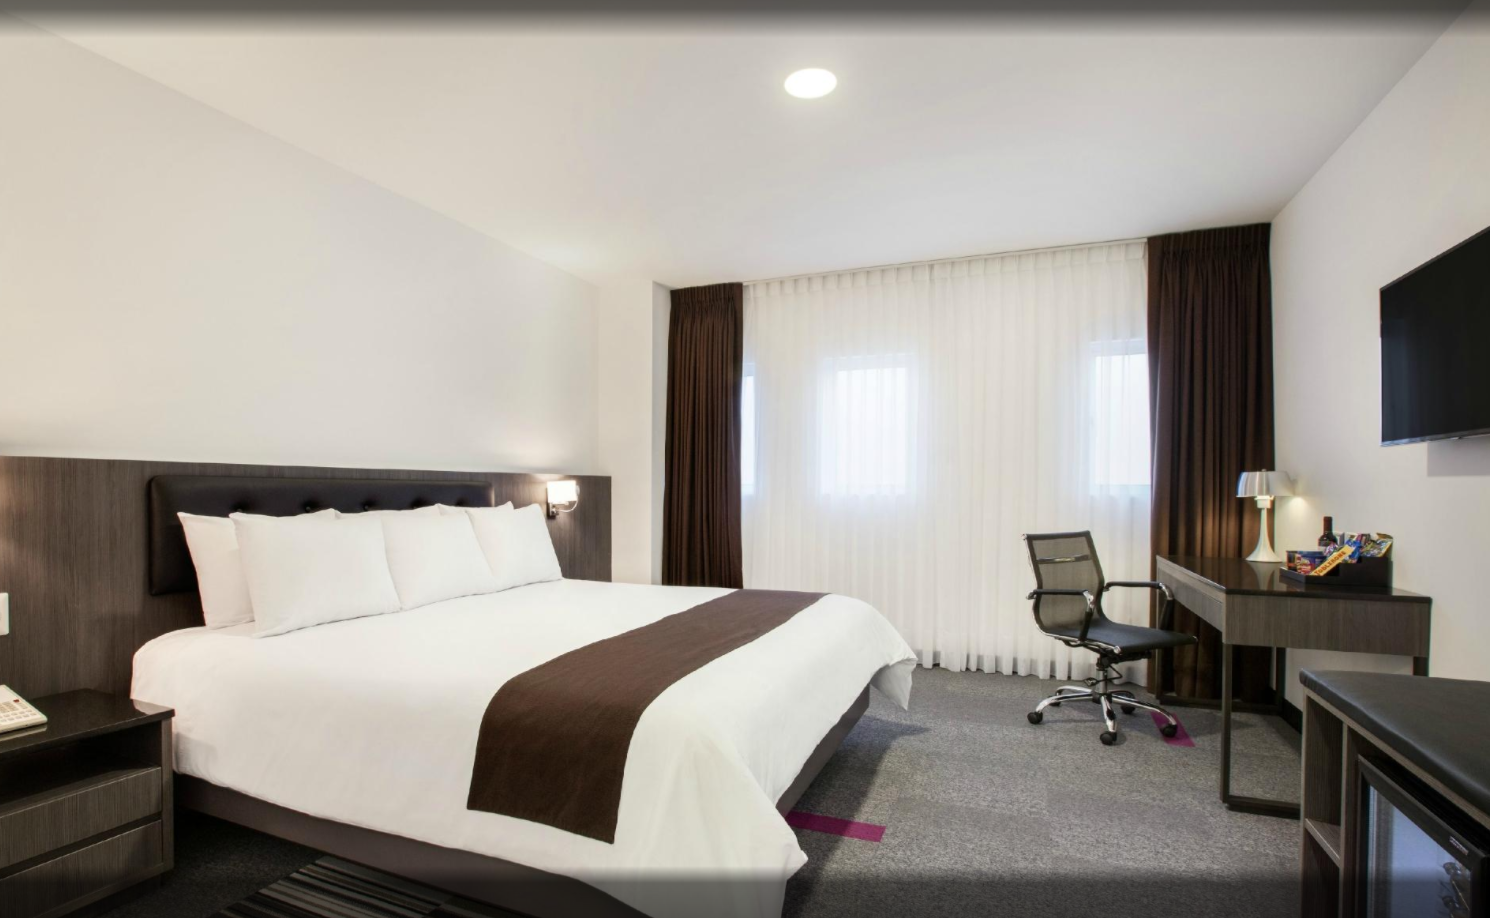 Wyndham Costa del Sol standard king guest room